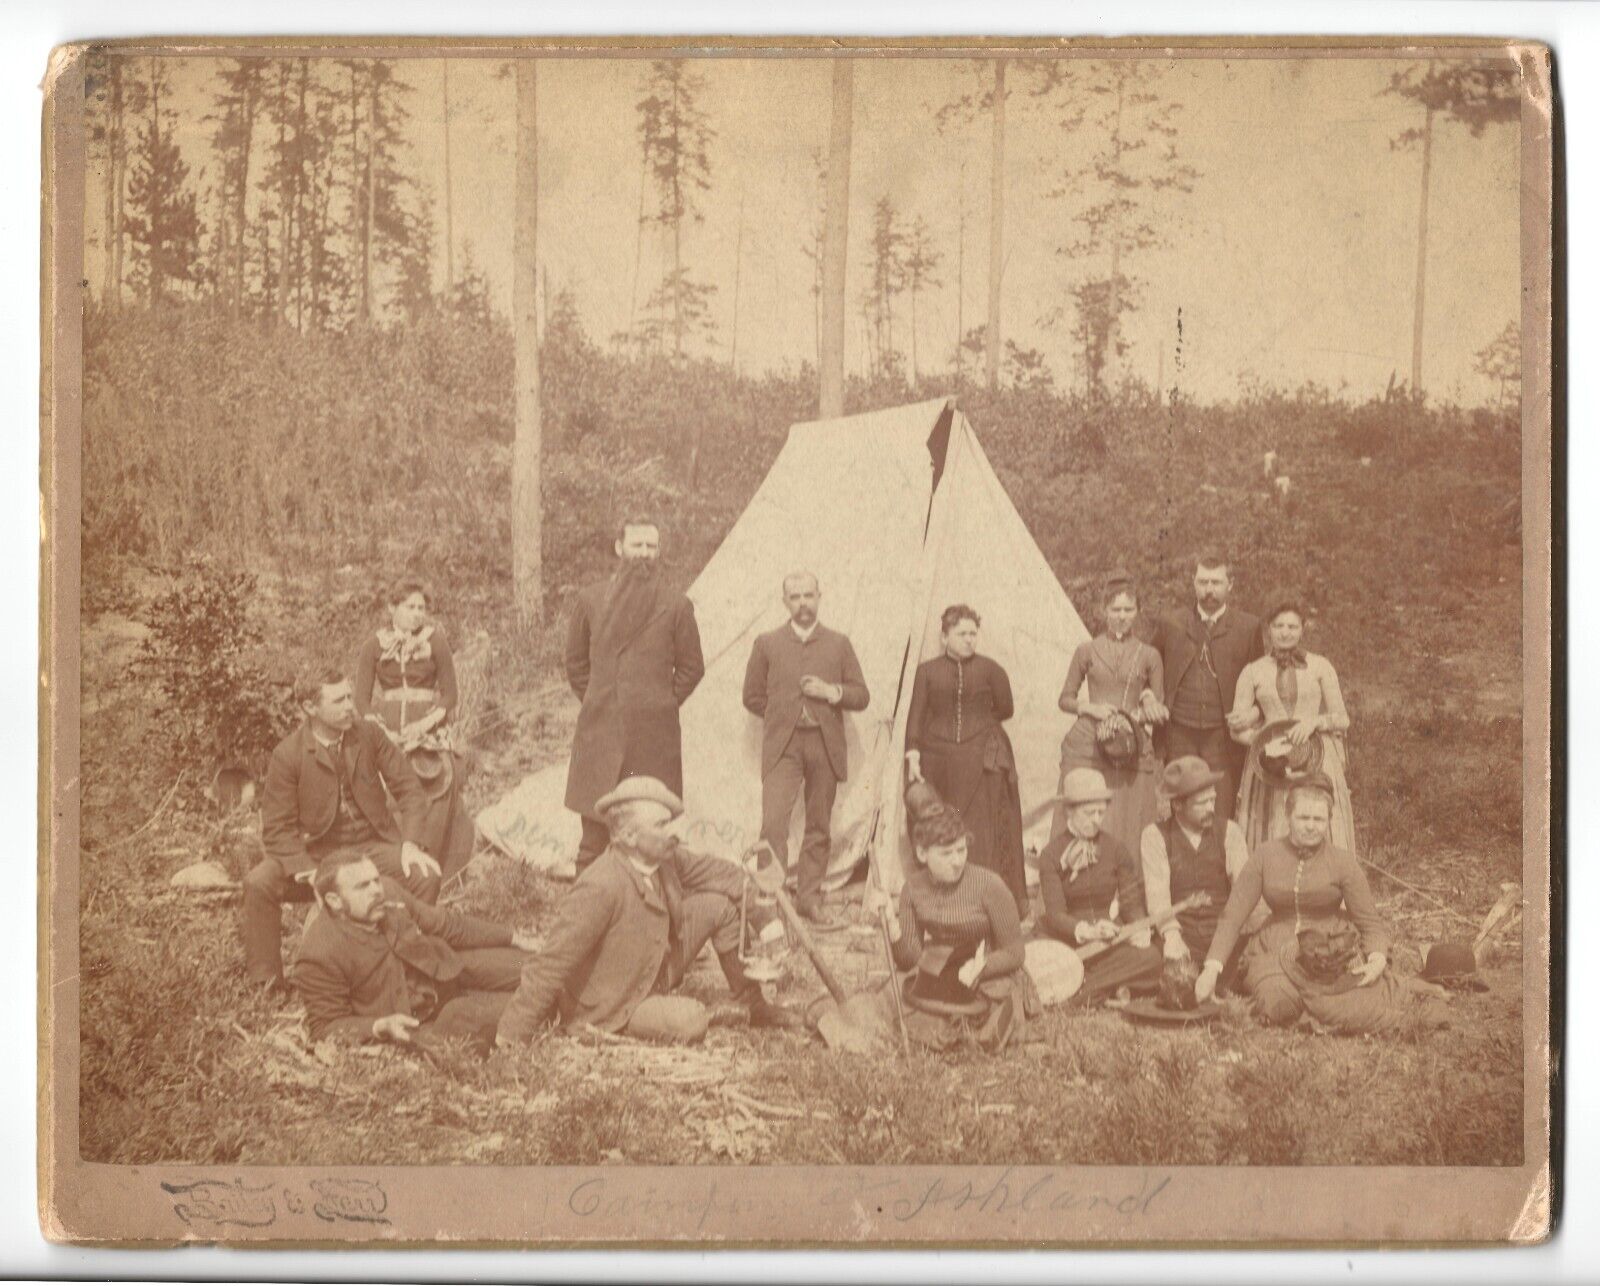 1890s camping party, tent, banjo, Ashland, Wisconsin; history, cabinet photo